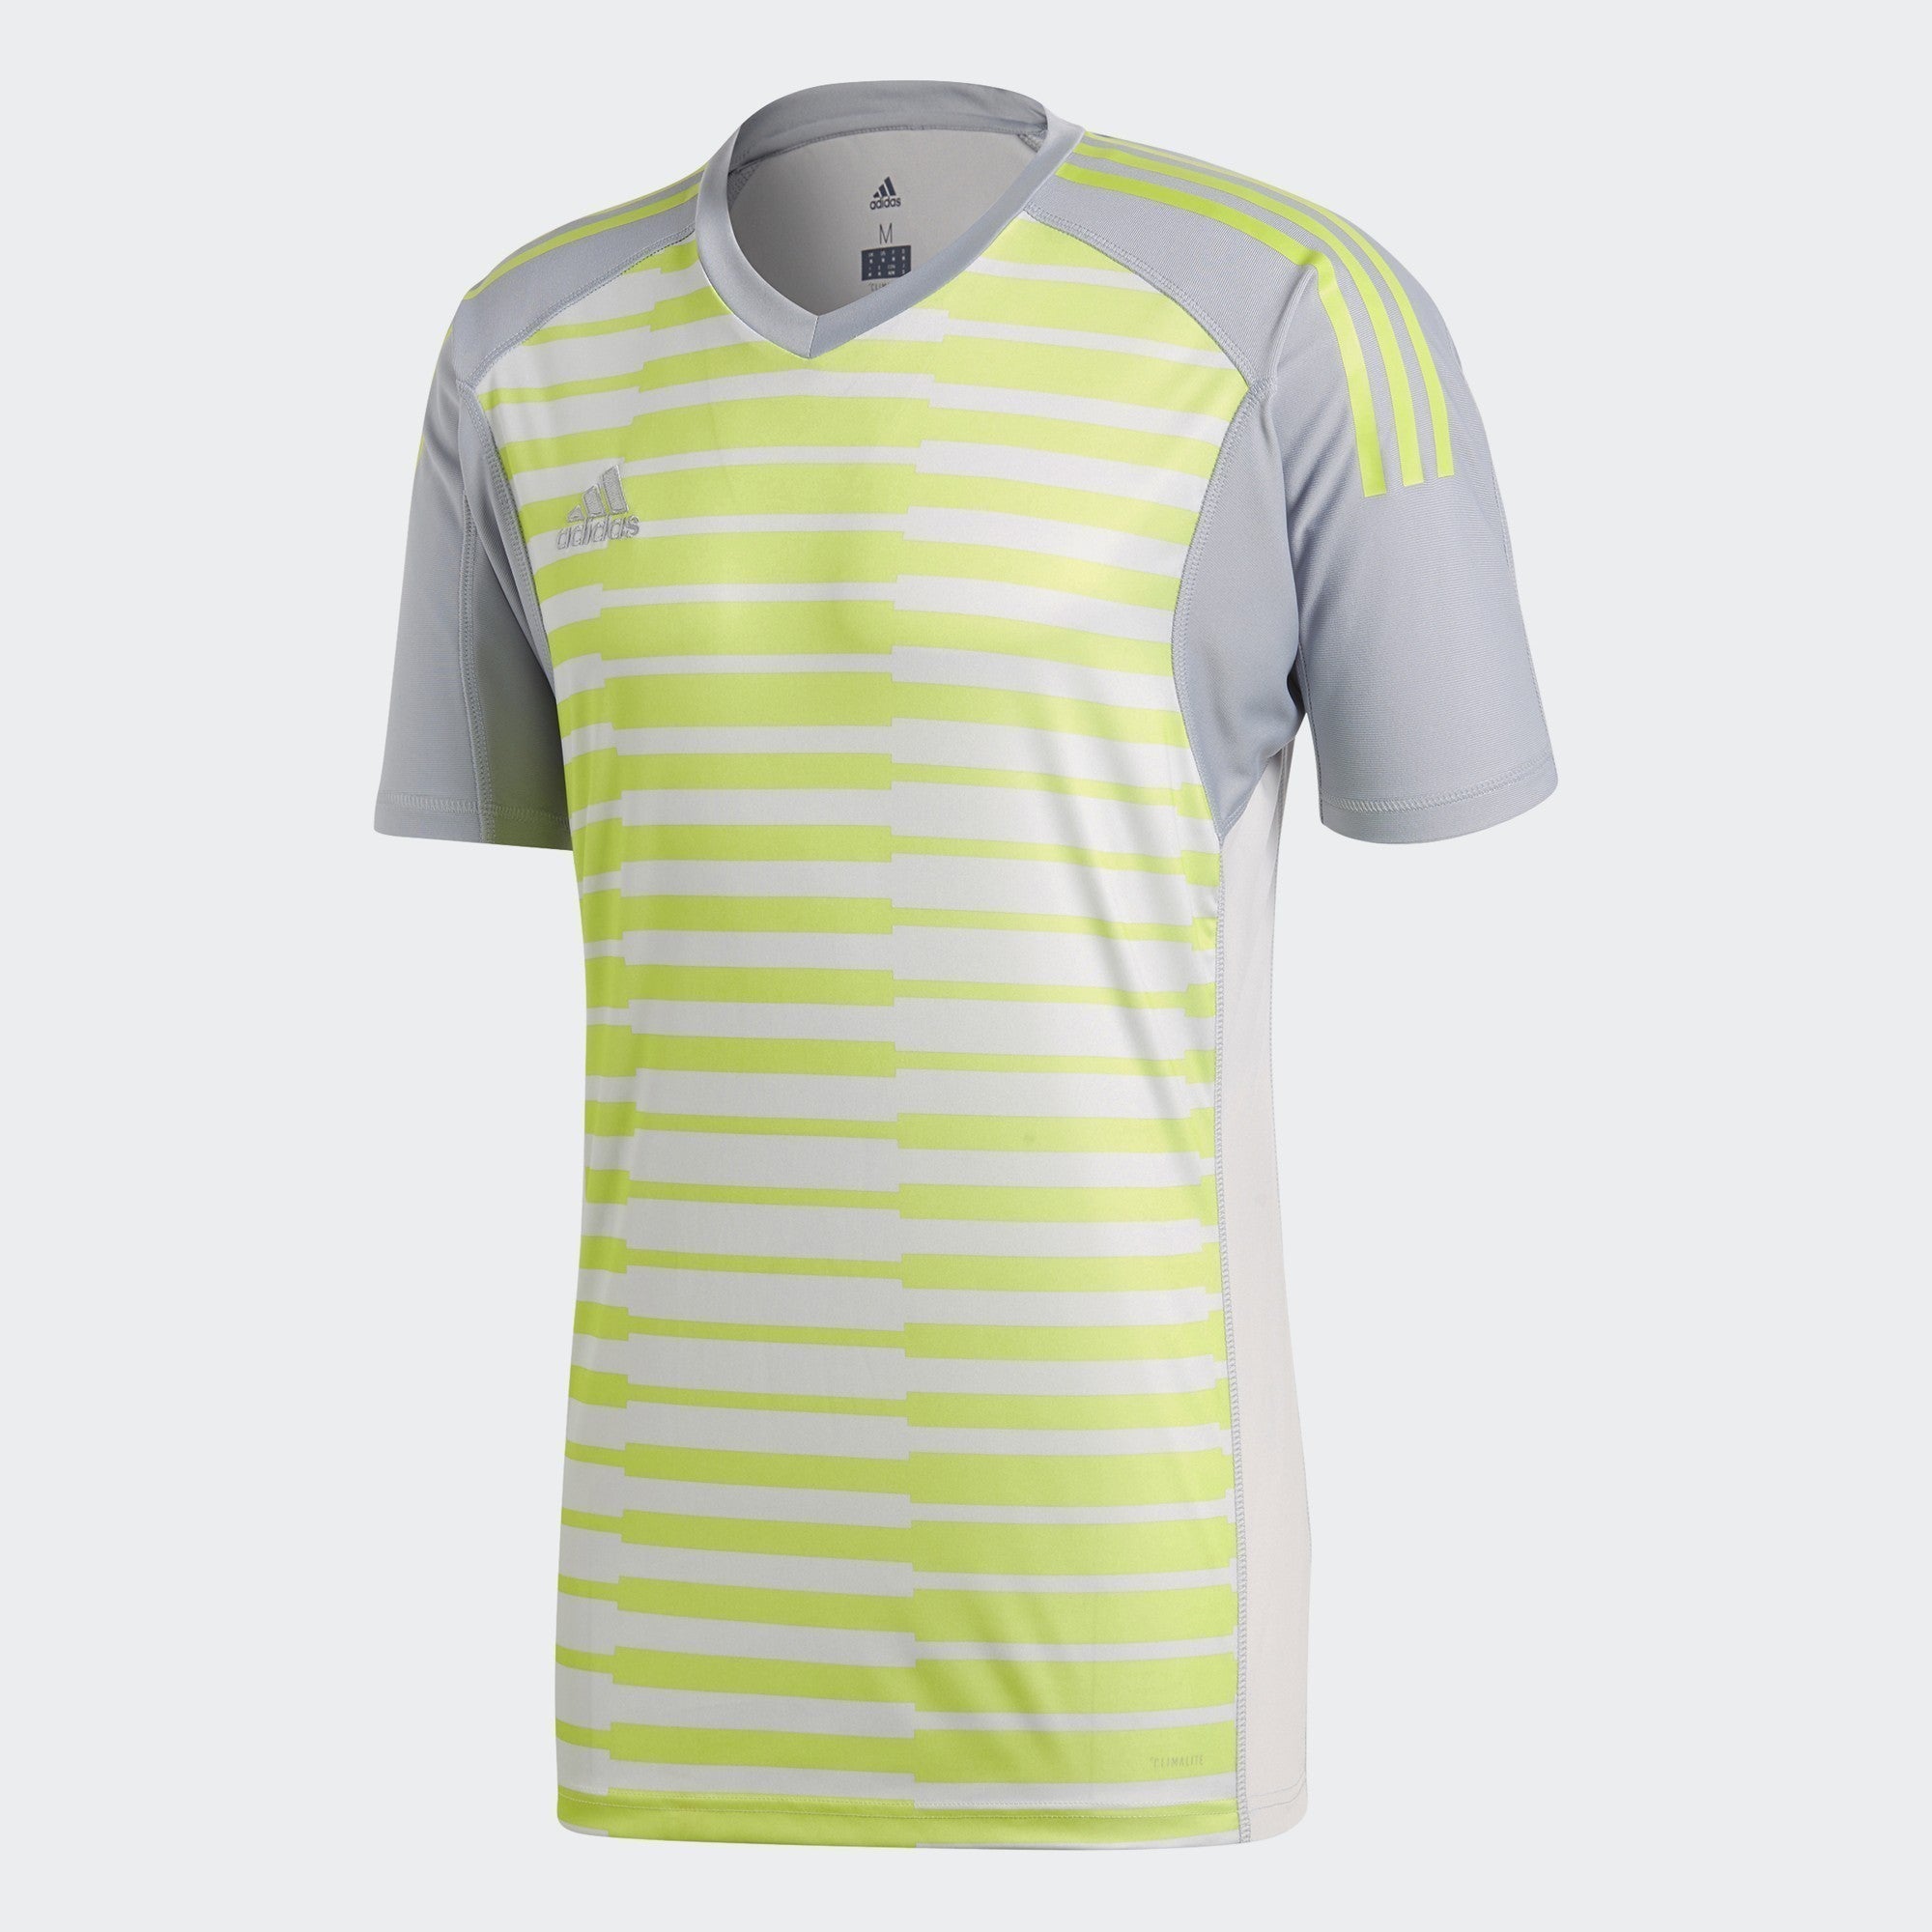 Men's AdiPro Goalkeeper Jersey - Grey/Solar Yellow